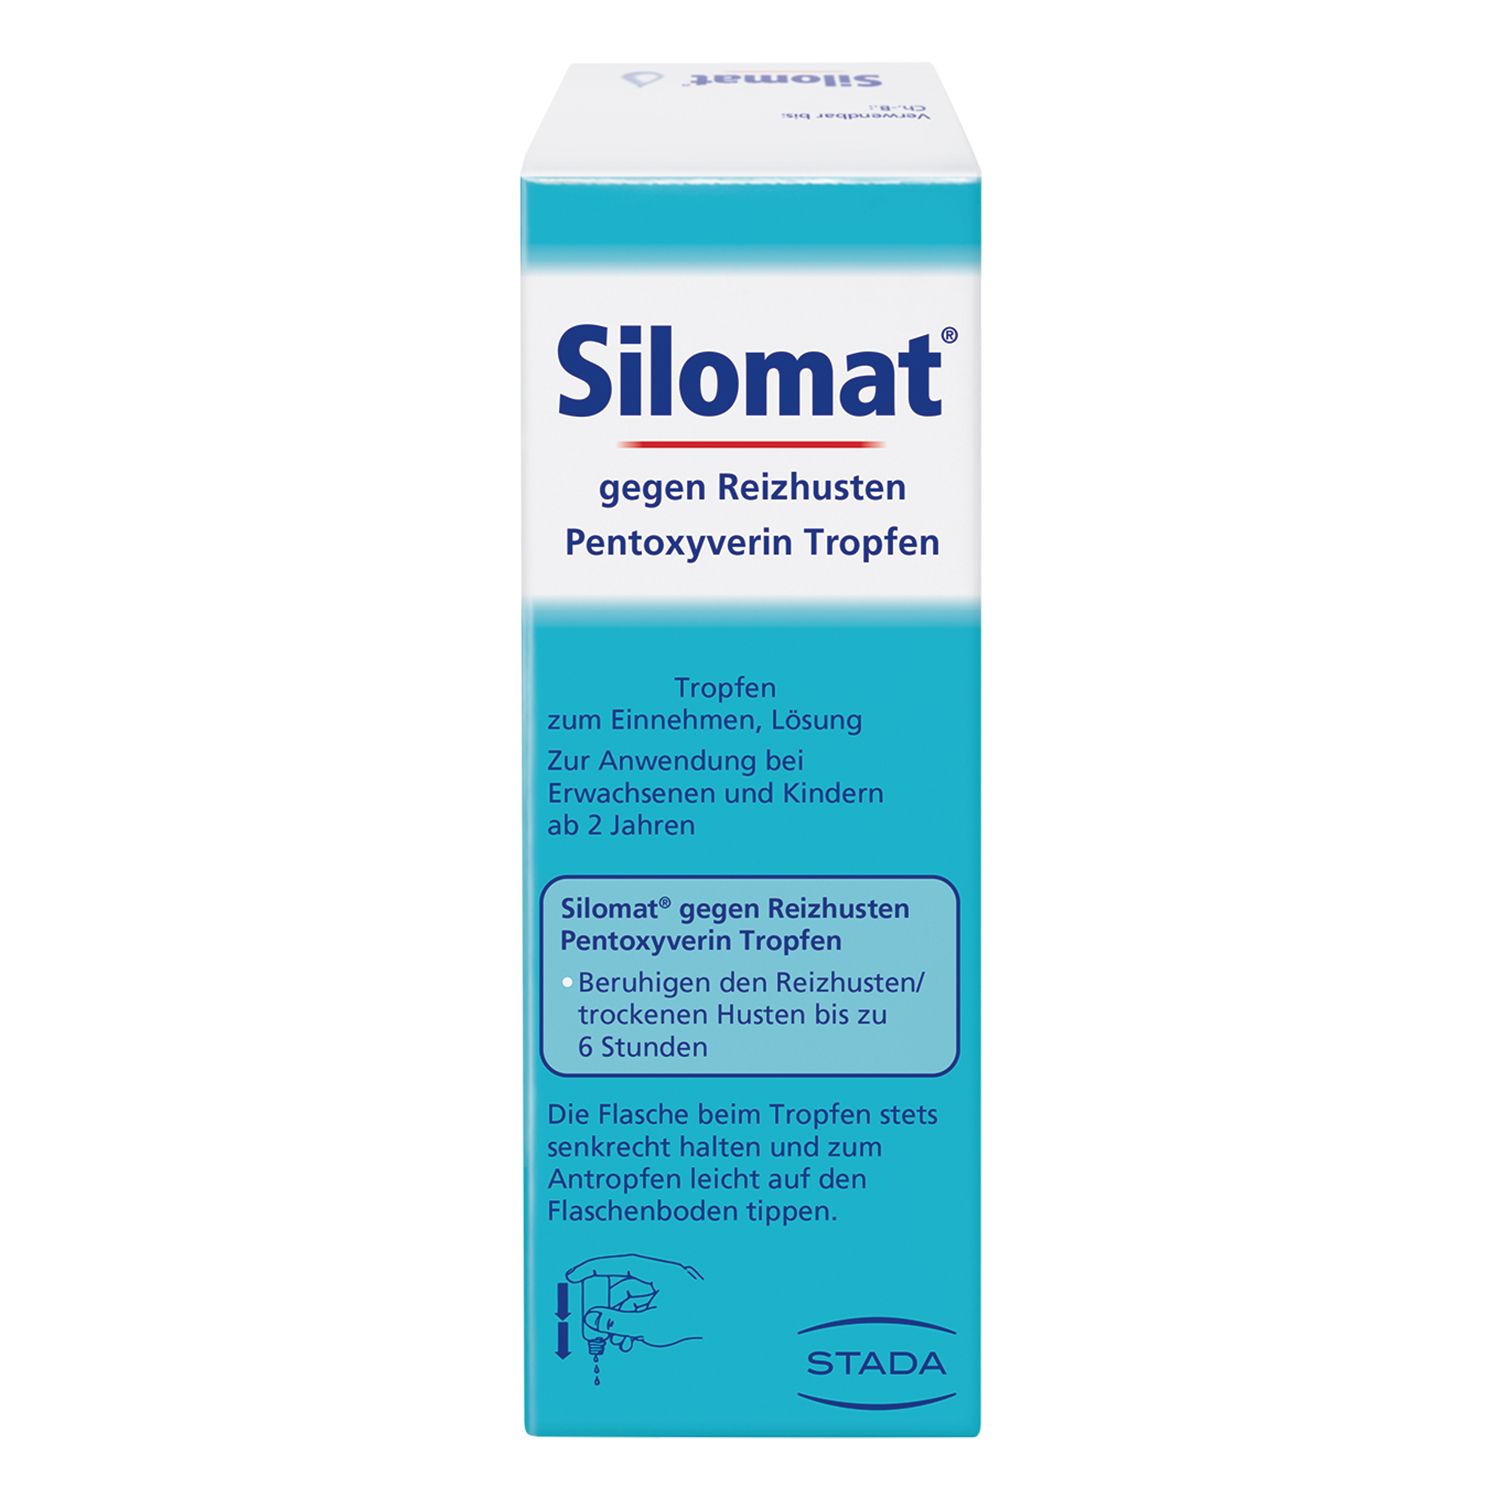 Silomat® gegen Reizhusten Pentoxyverin